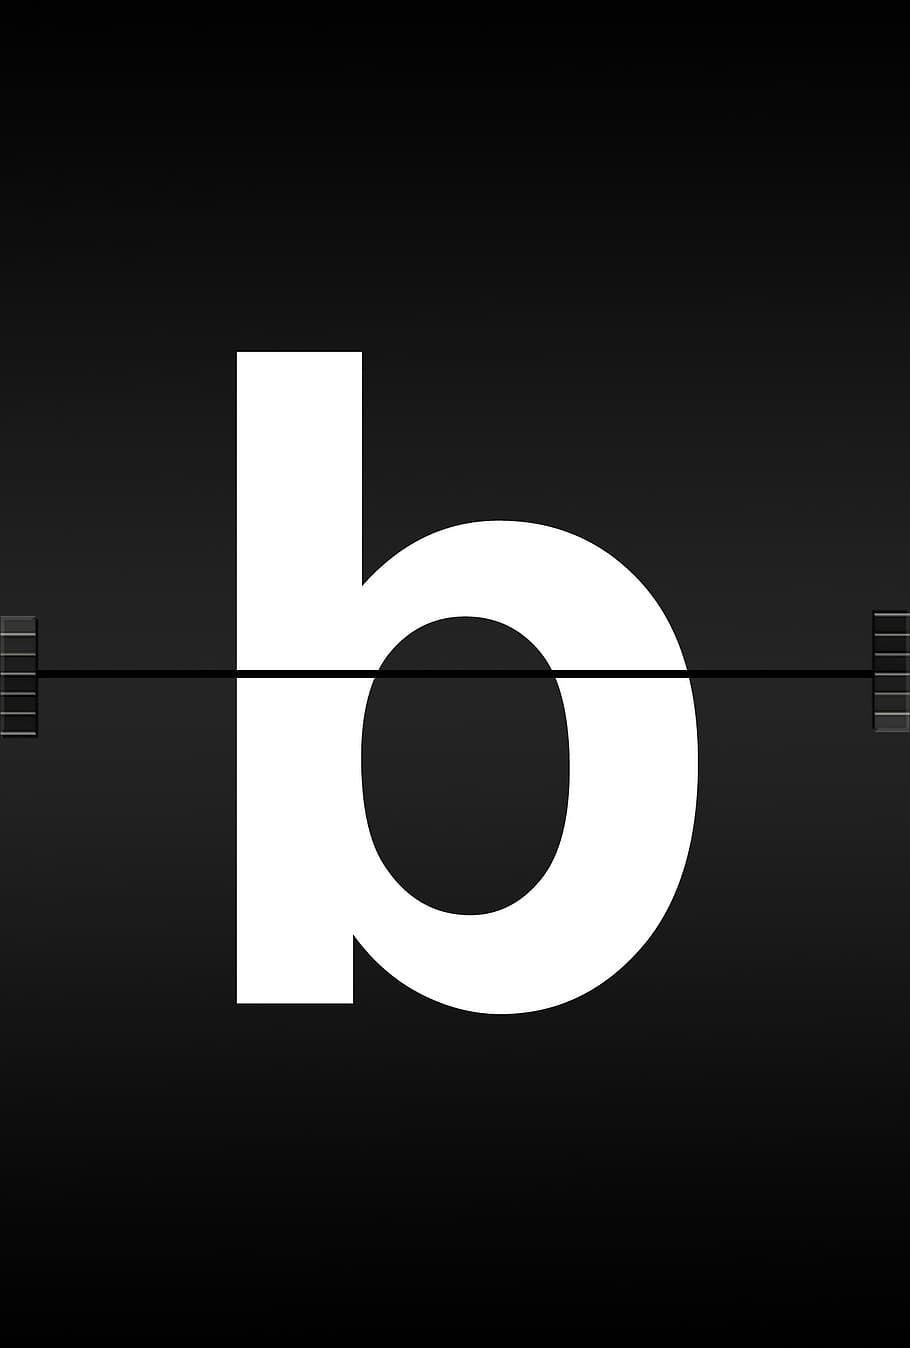 white b illustration, letters, abc, alphabet, journal font, airport, scoreboard, ad, railway station, board